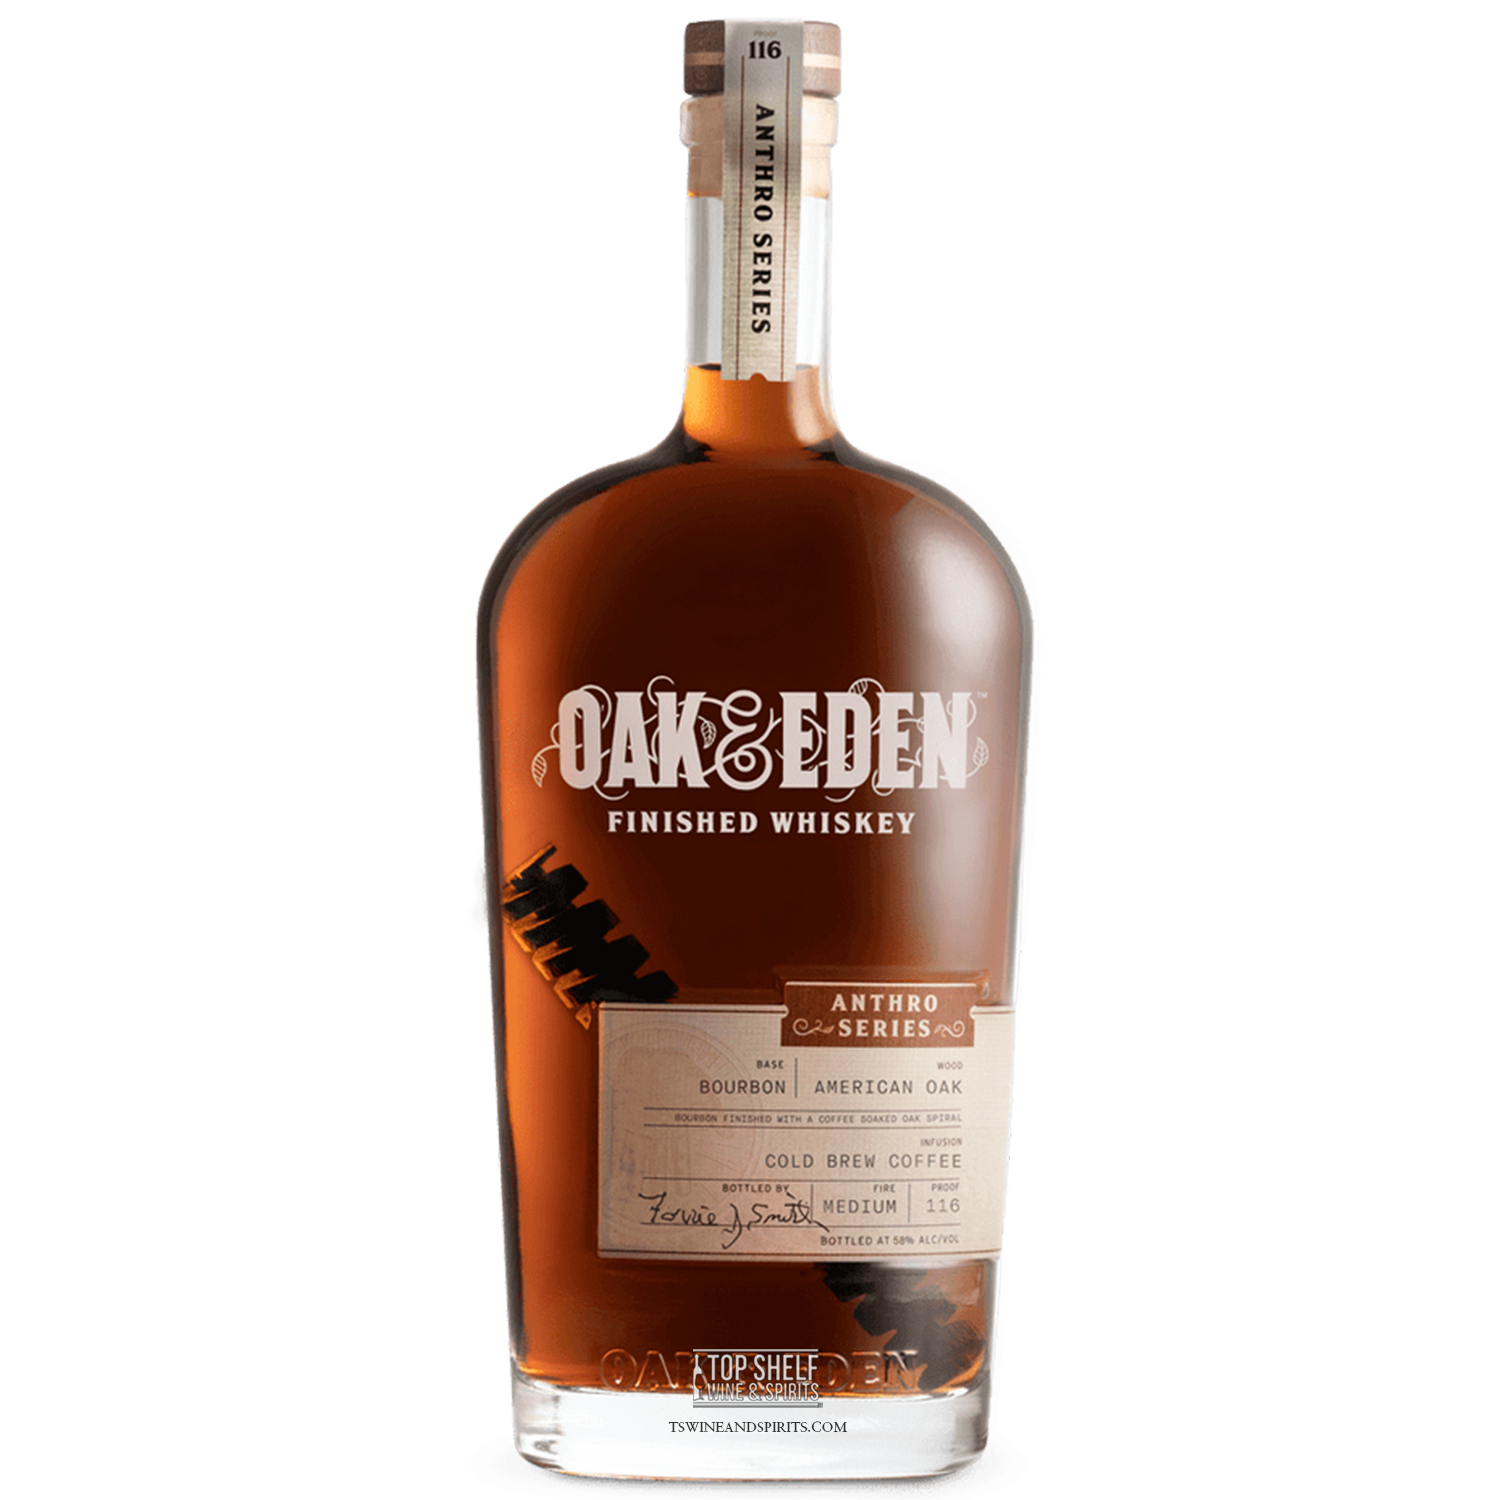 Oak & Eden Forrie J. Smith Bourbon (Anthro Series)